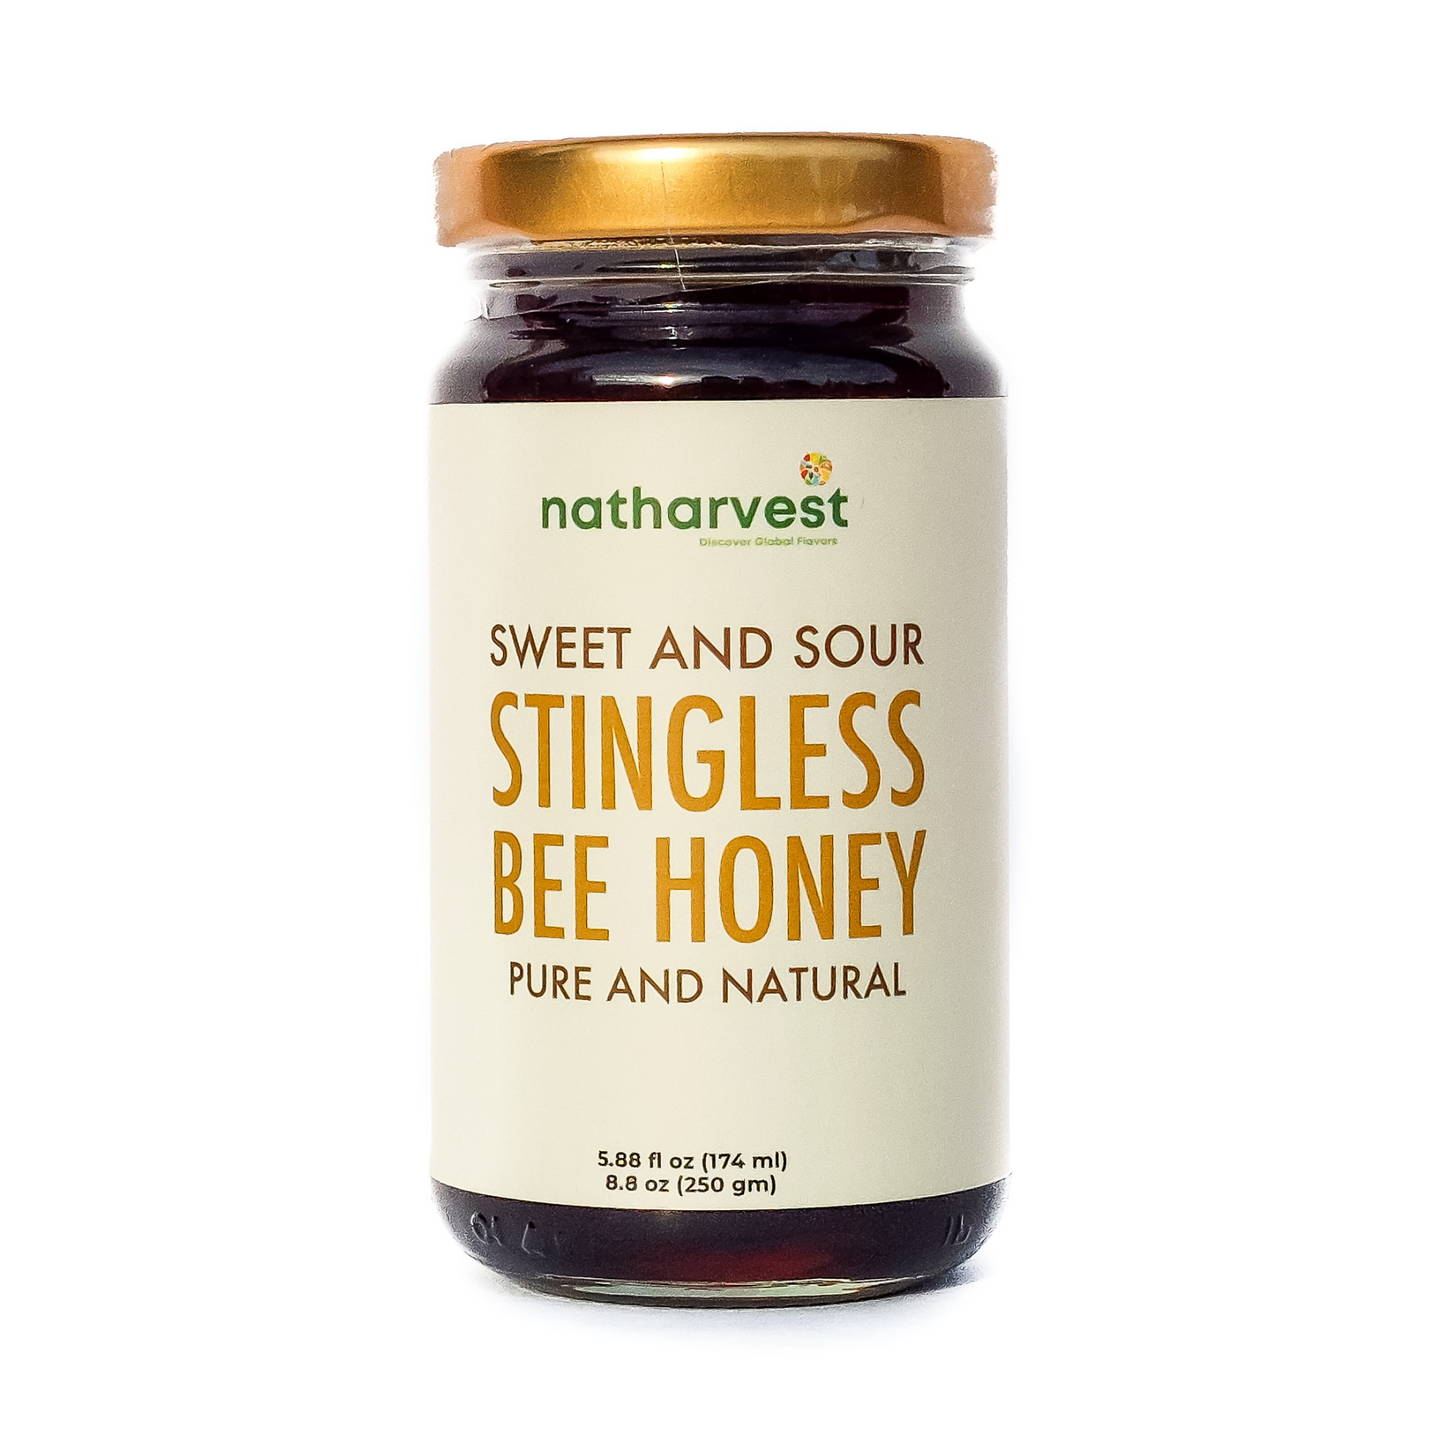 Natharvest Sweet and Sour Stingless Bee Honey, 8.8 oz (250 grams)